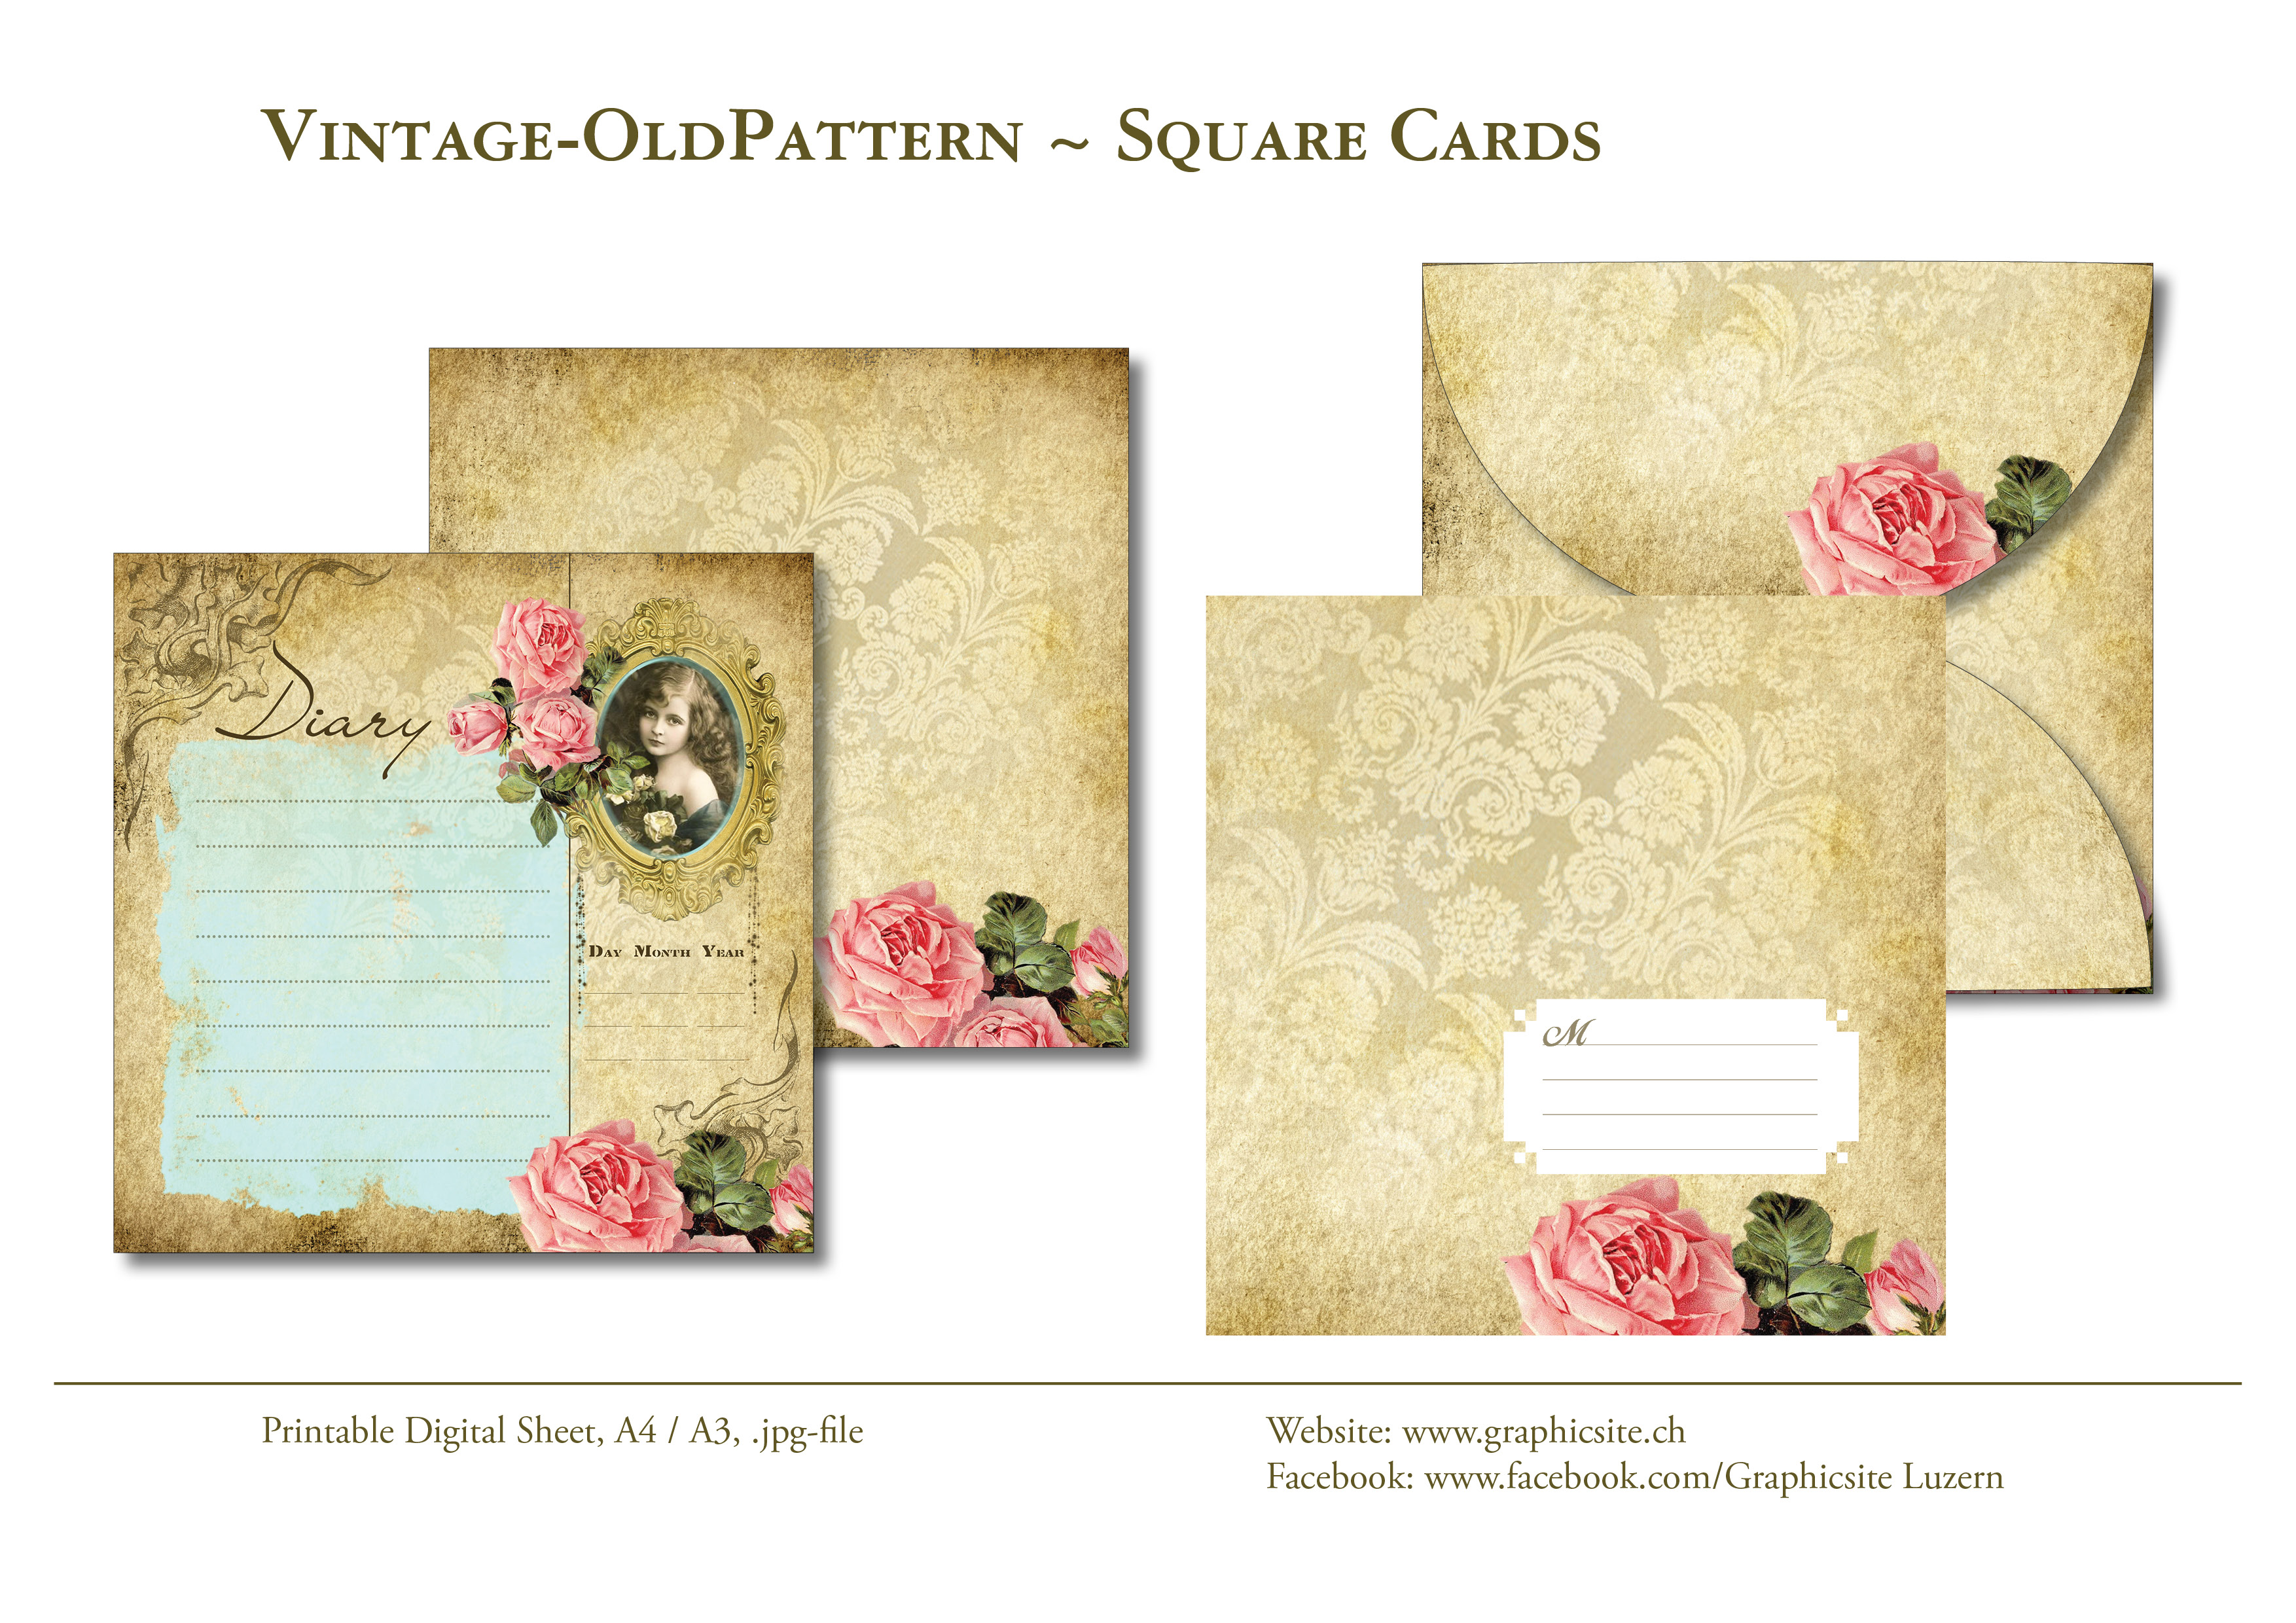 Printable Digital Sheets - Cards - Square Cards - Greeting Cards - Love Cards - download - online - Flowers - Floral - Vintage Cards - Old Pattern - Girl - Graphic Design, Luzern, Schweiz